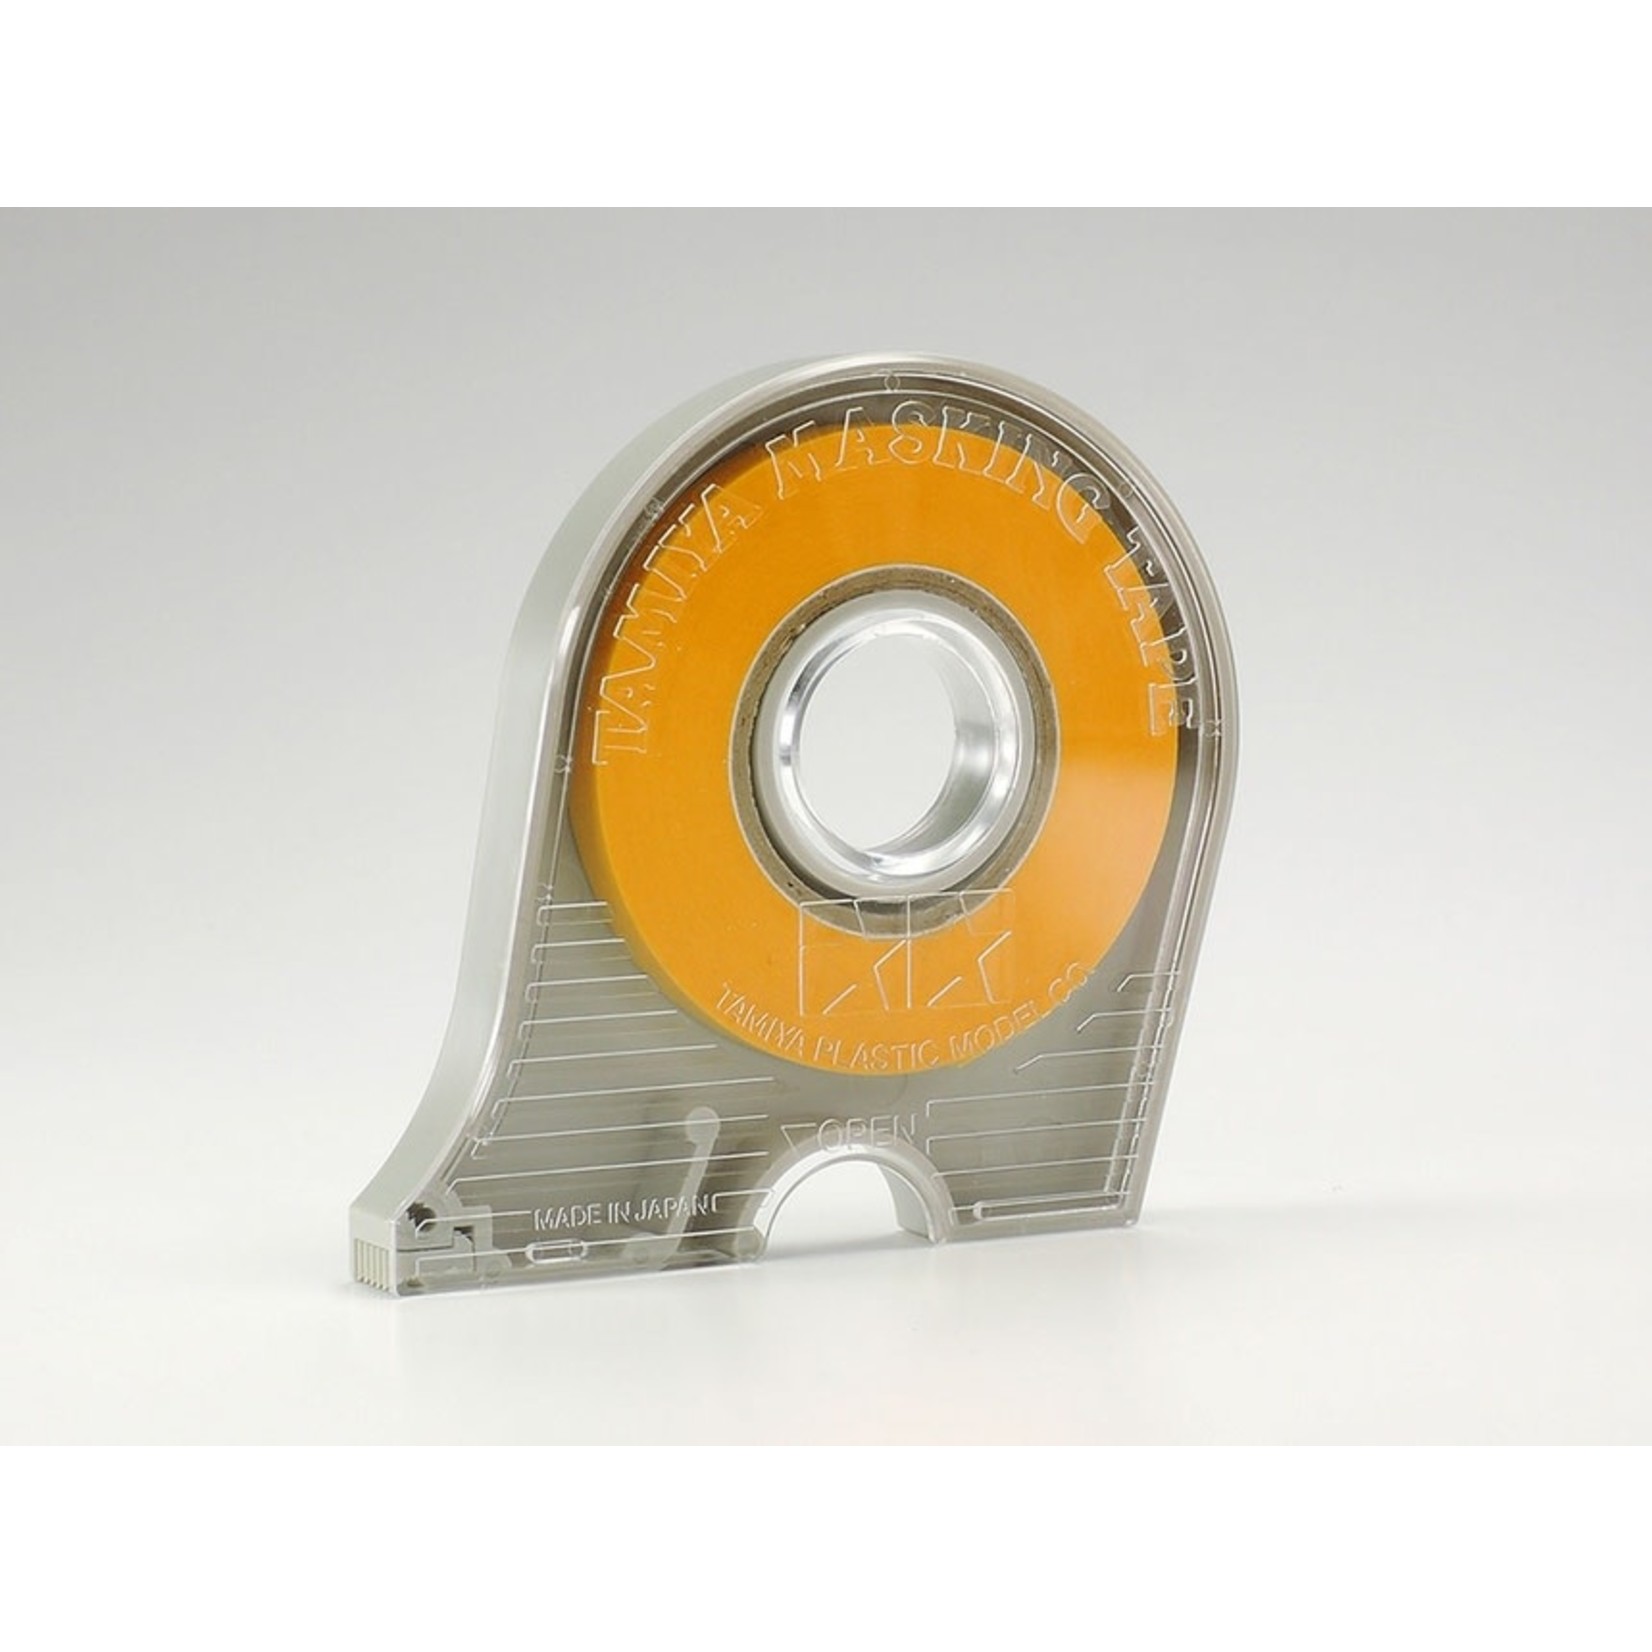 Tamiya TAM87030 Tamiya Masking Tape, 6mm